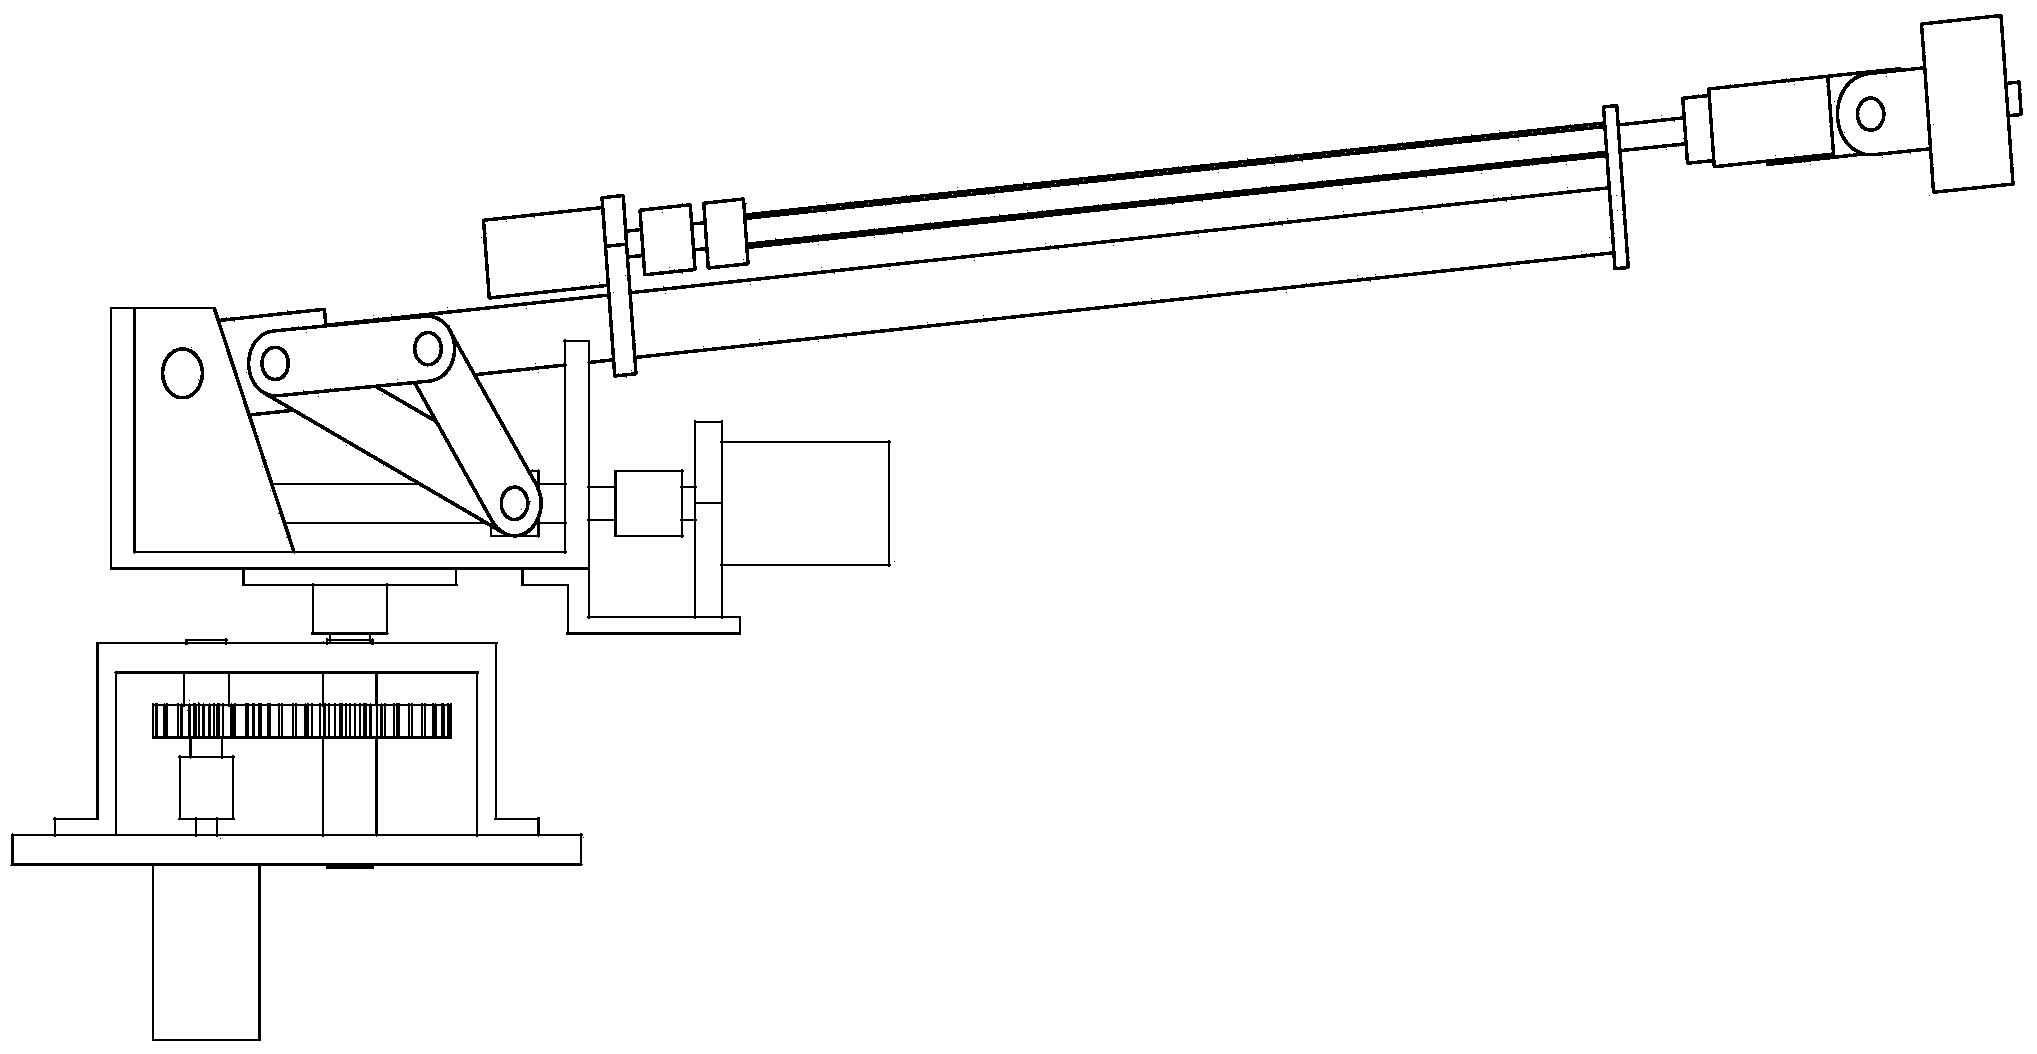 Folding type probing mechanical arm based on triangular configured connecting rod transmission